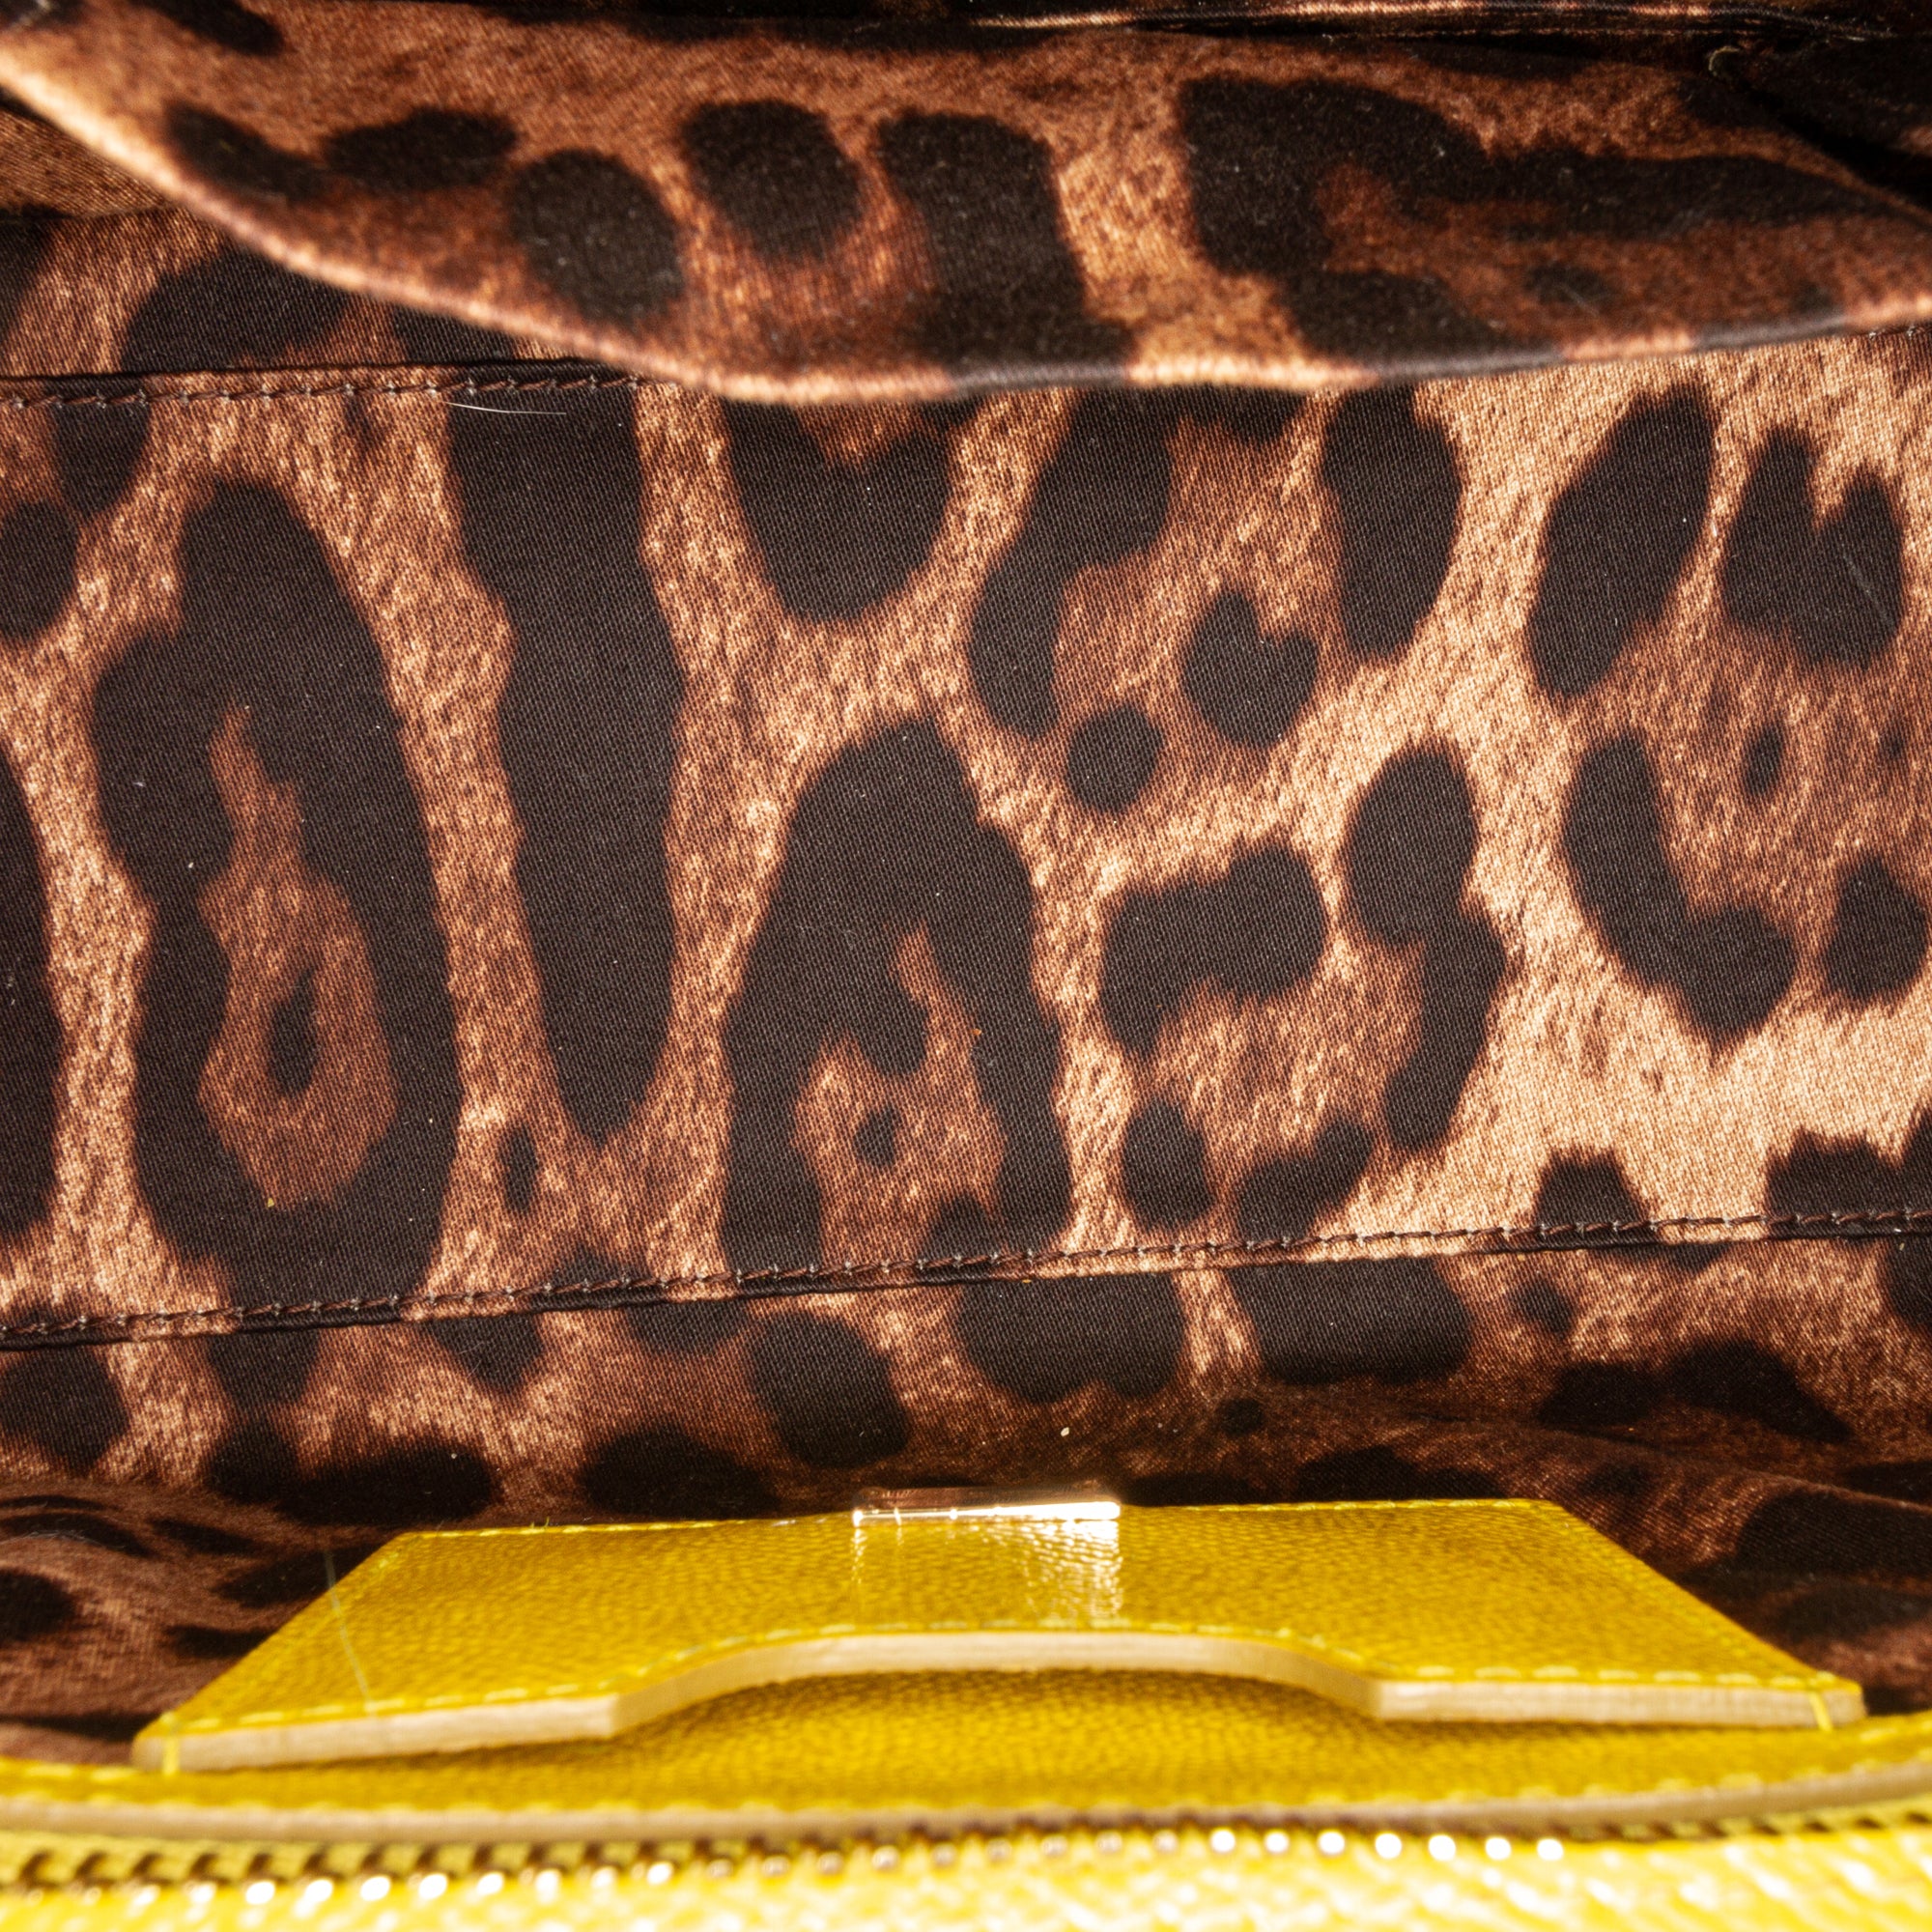 Yellow Dolce&Gabbana Miss Sicily Leather Satchel – Designer Revival